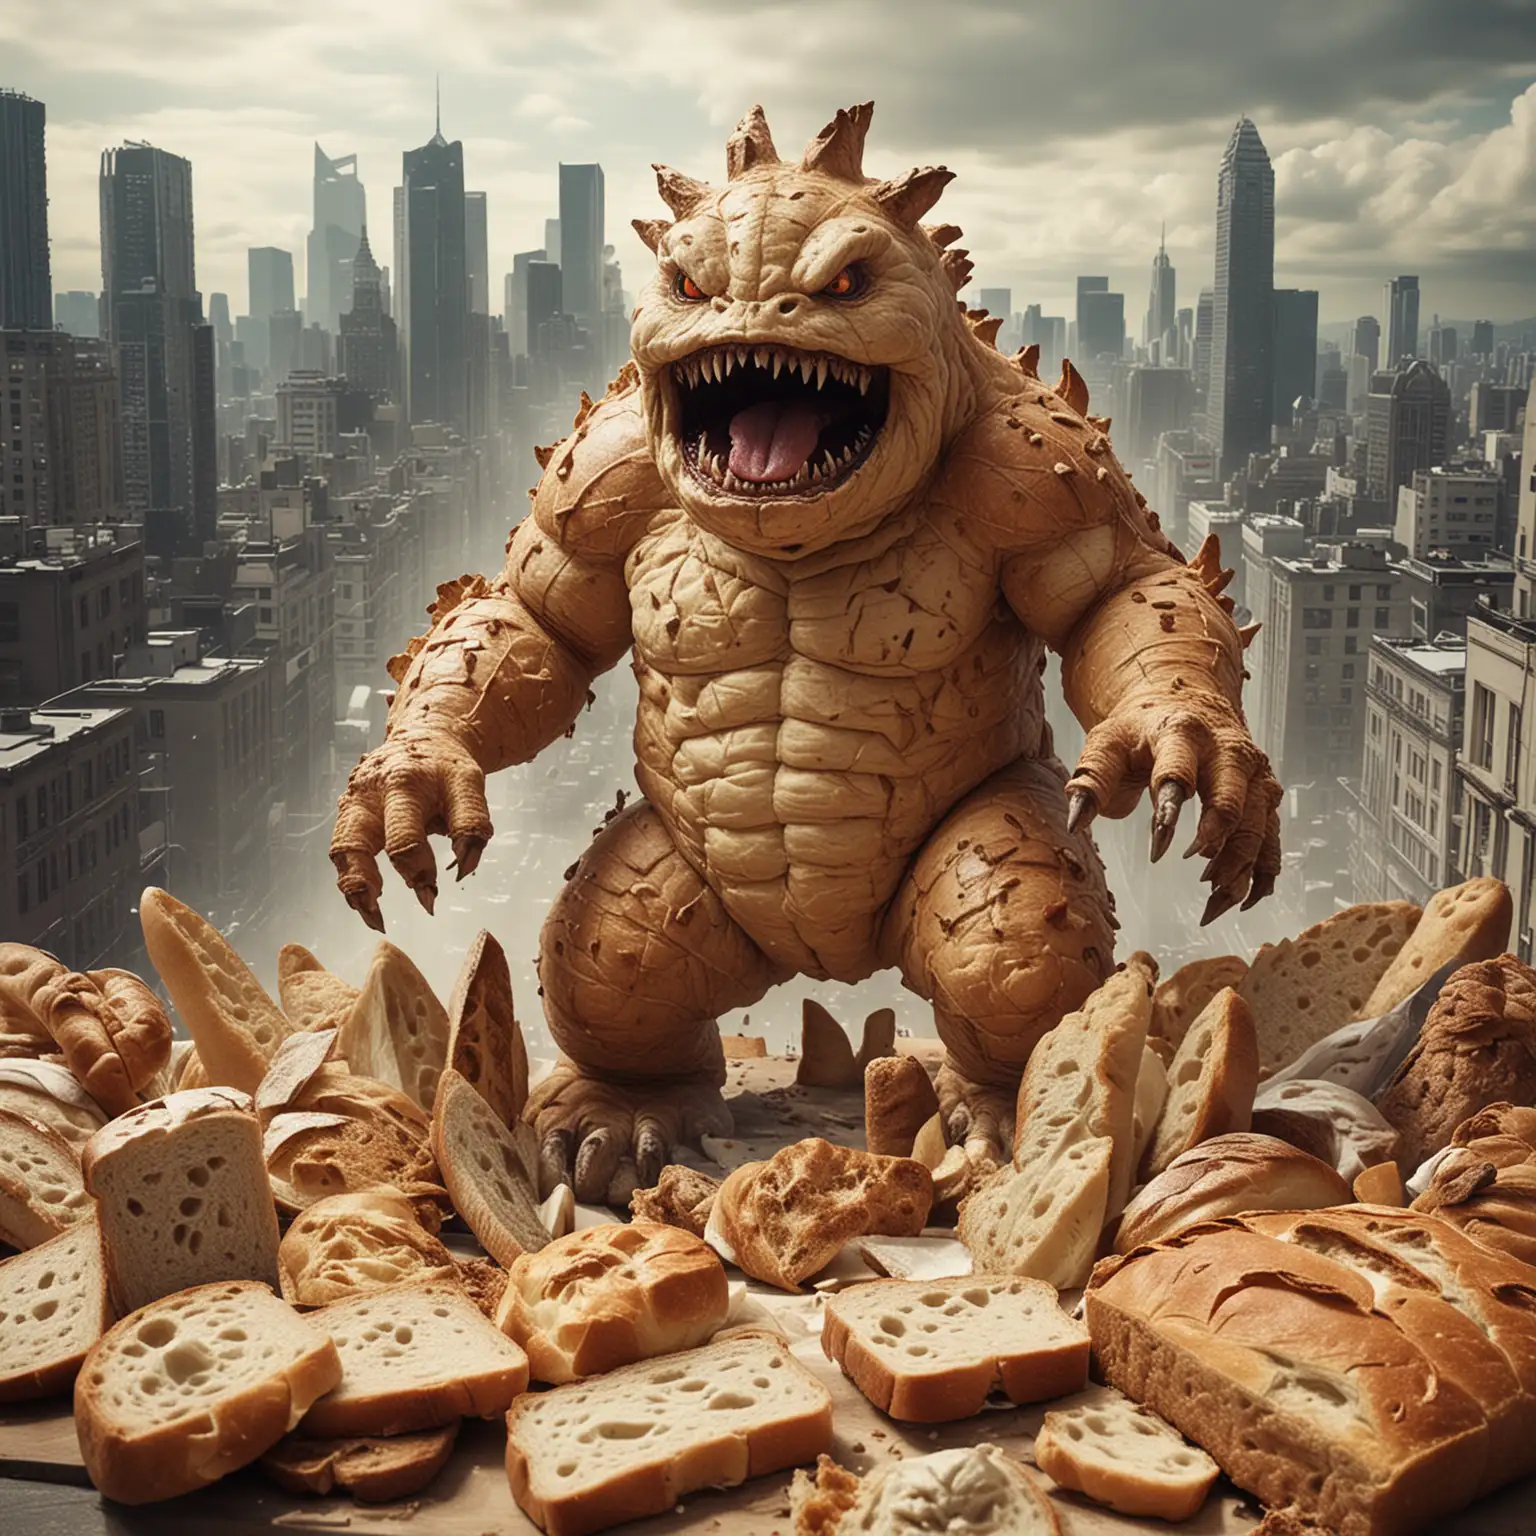 Giant Sourdough Bread Monster Rampaging Through Cityscape